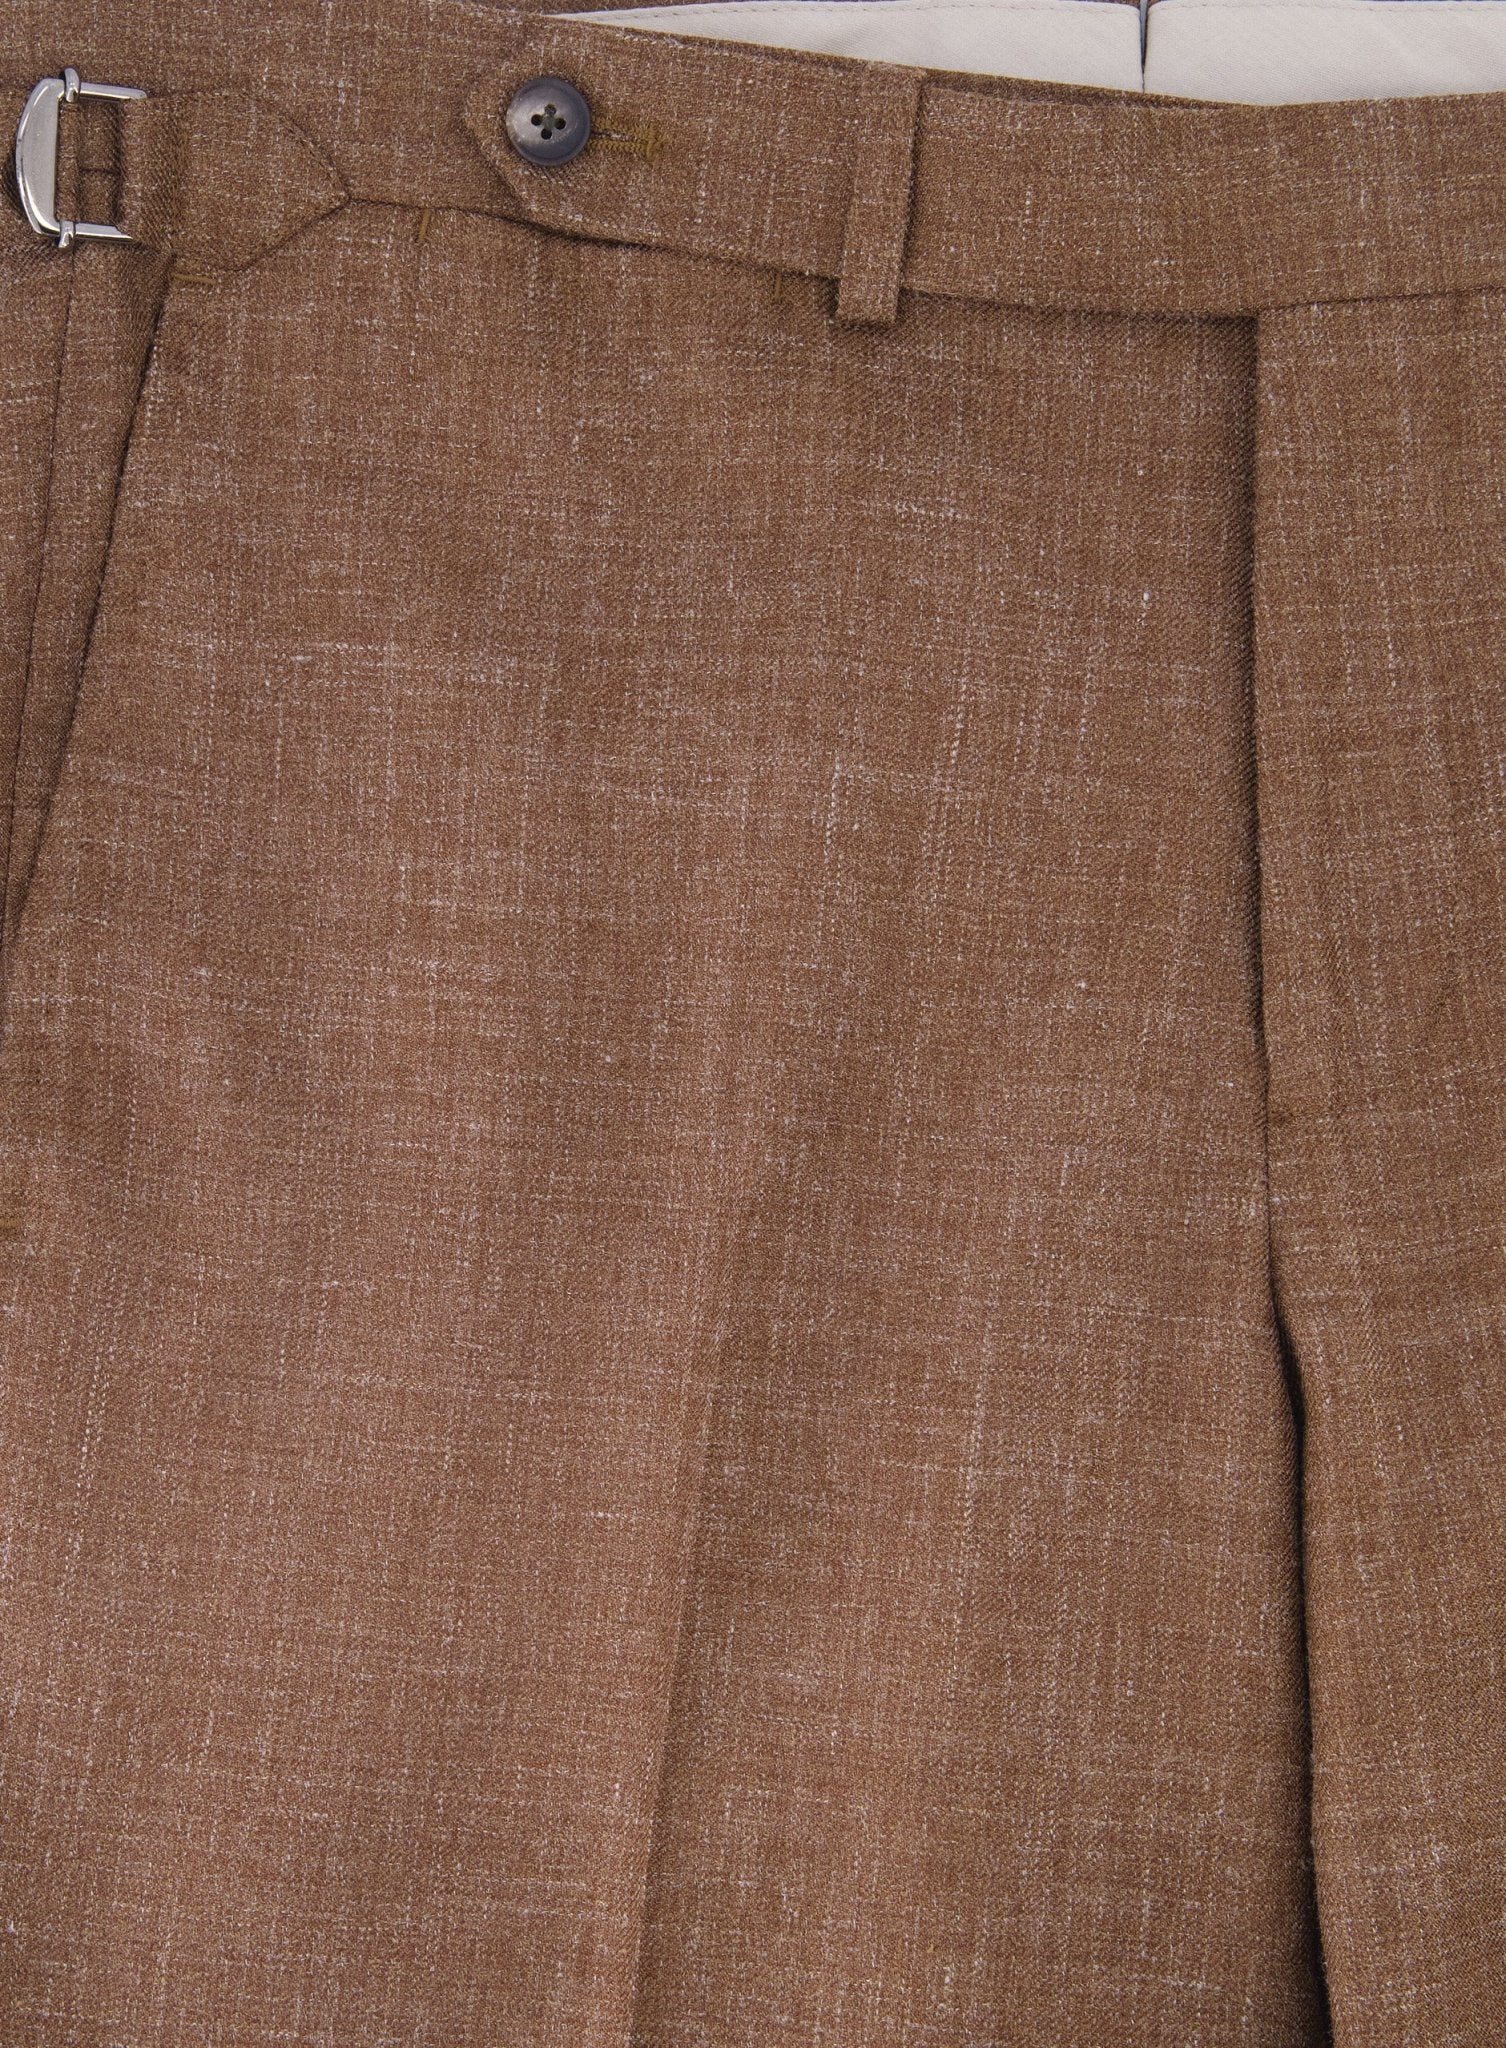 Pantalon van wol, zijde en linnen | Roest